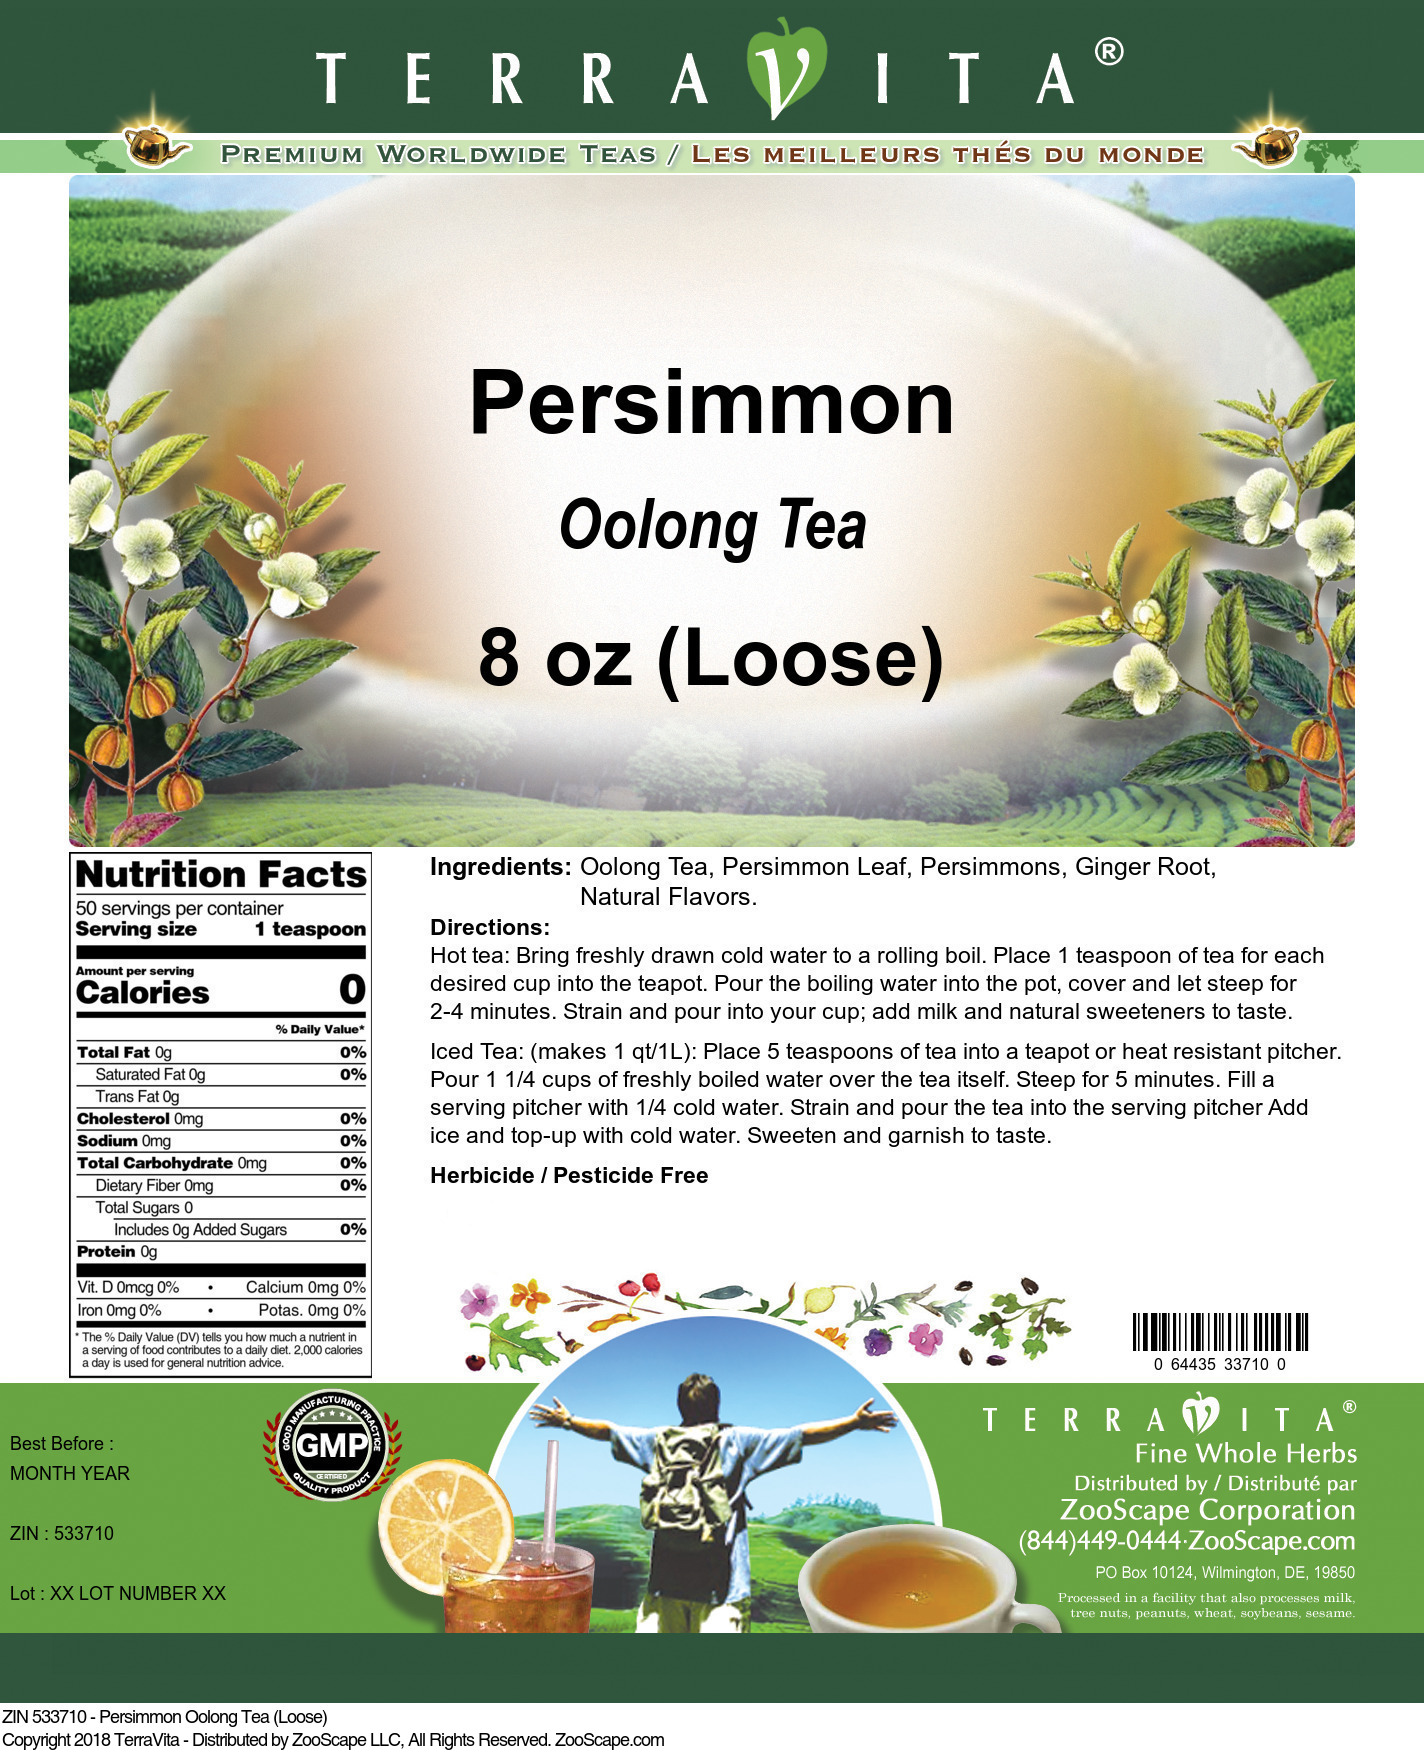 Persimmon Oolong Tea (Loose) - Label